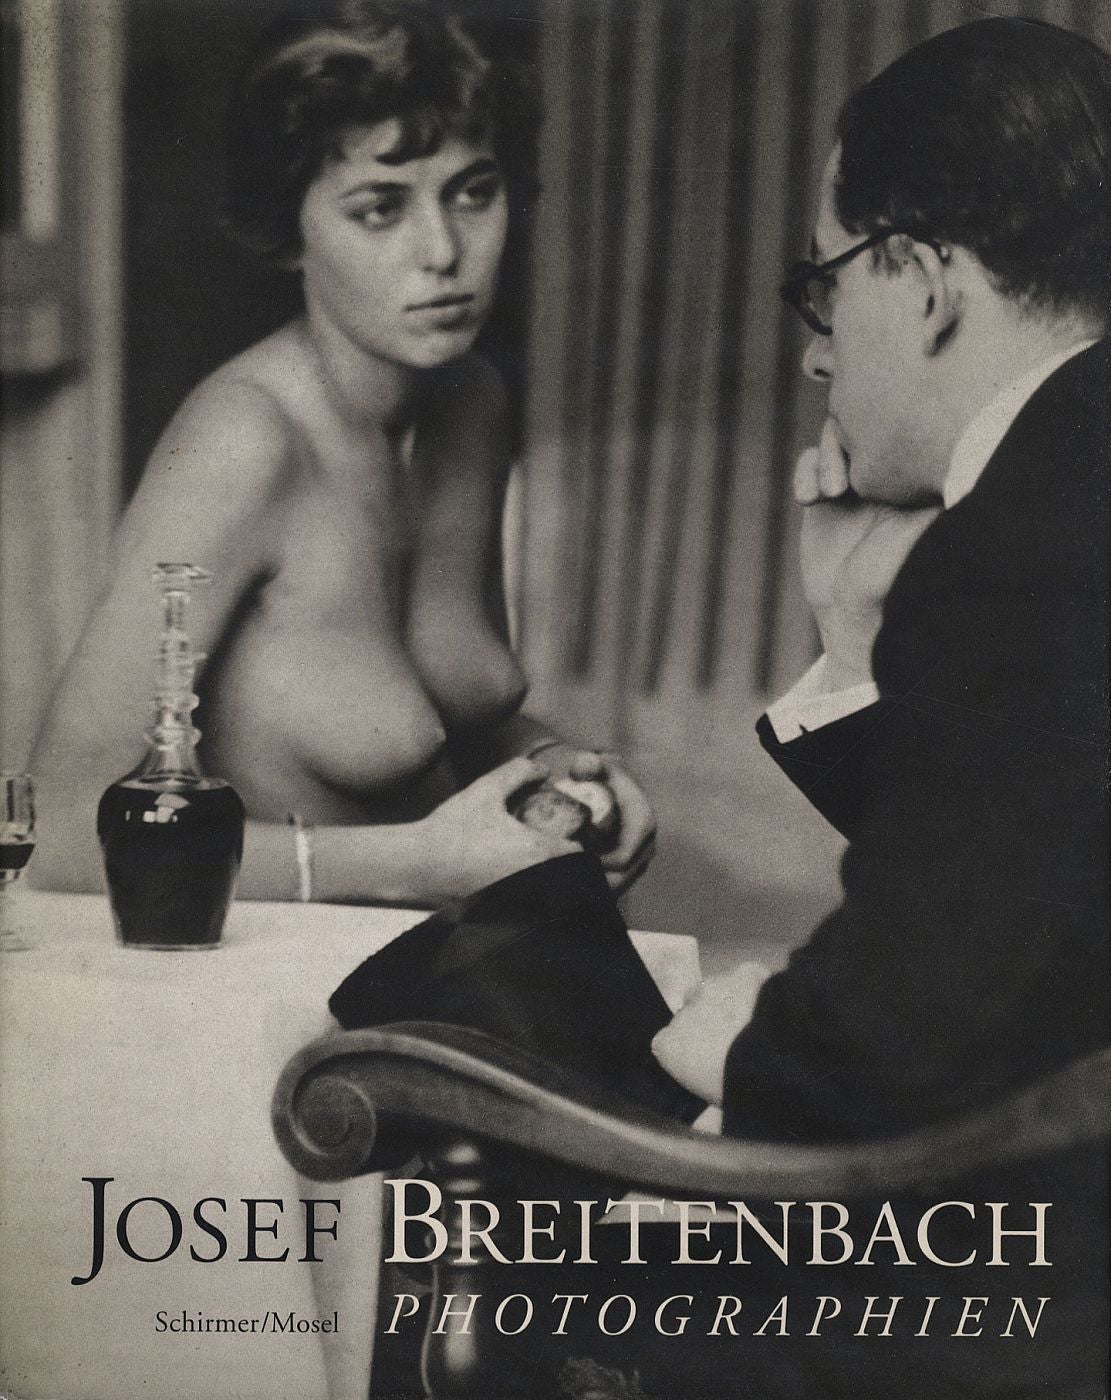 Josef Breitenbach: Photographien (Schirmer/Mosel Edition)